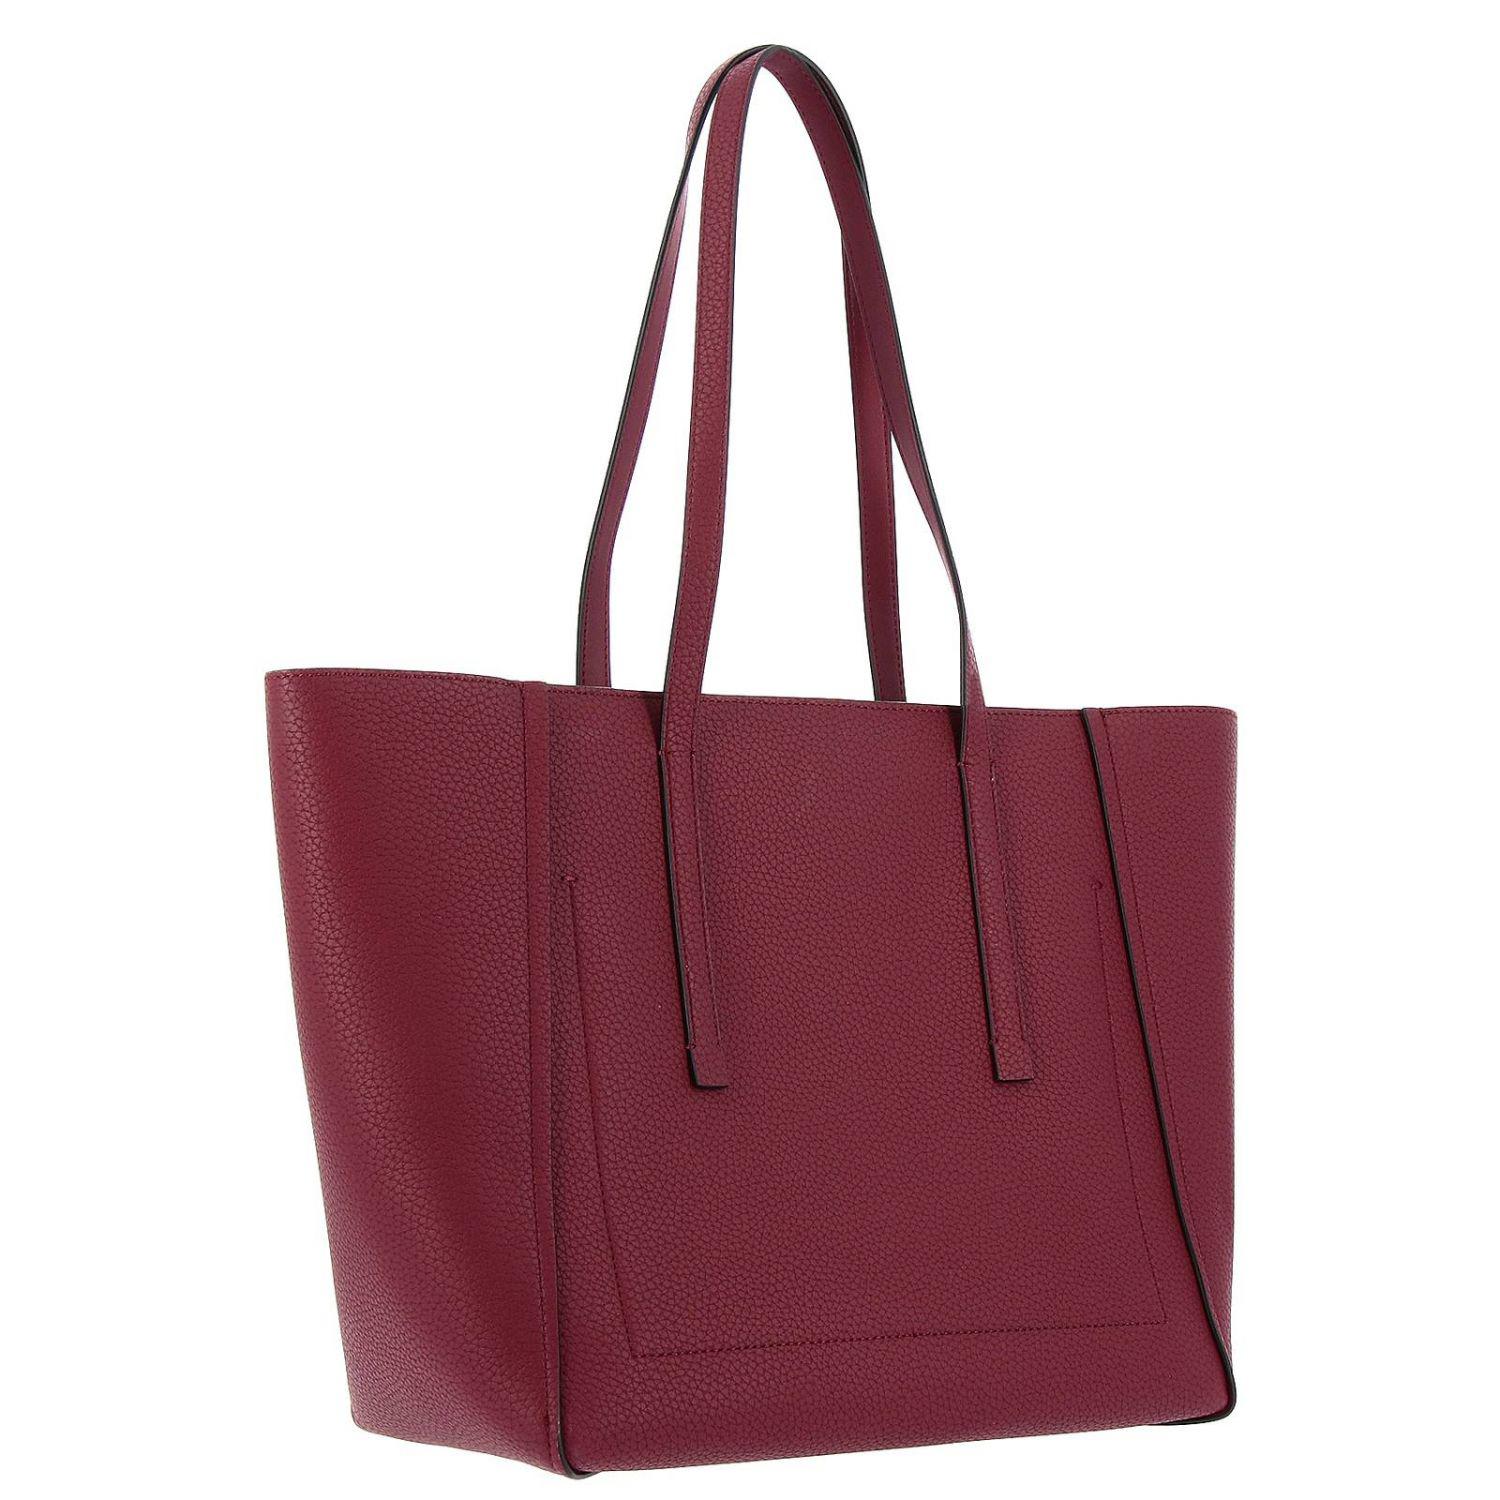 Calvin Klein Leather Mini Bag Burgundy Red Pink Purple 